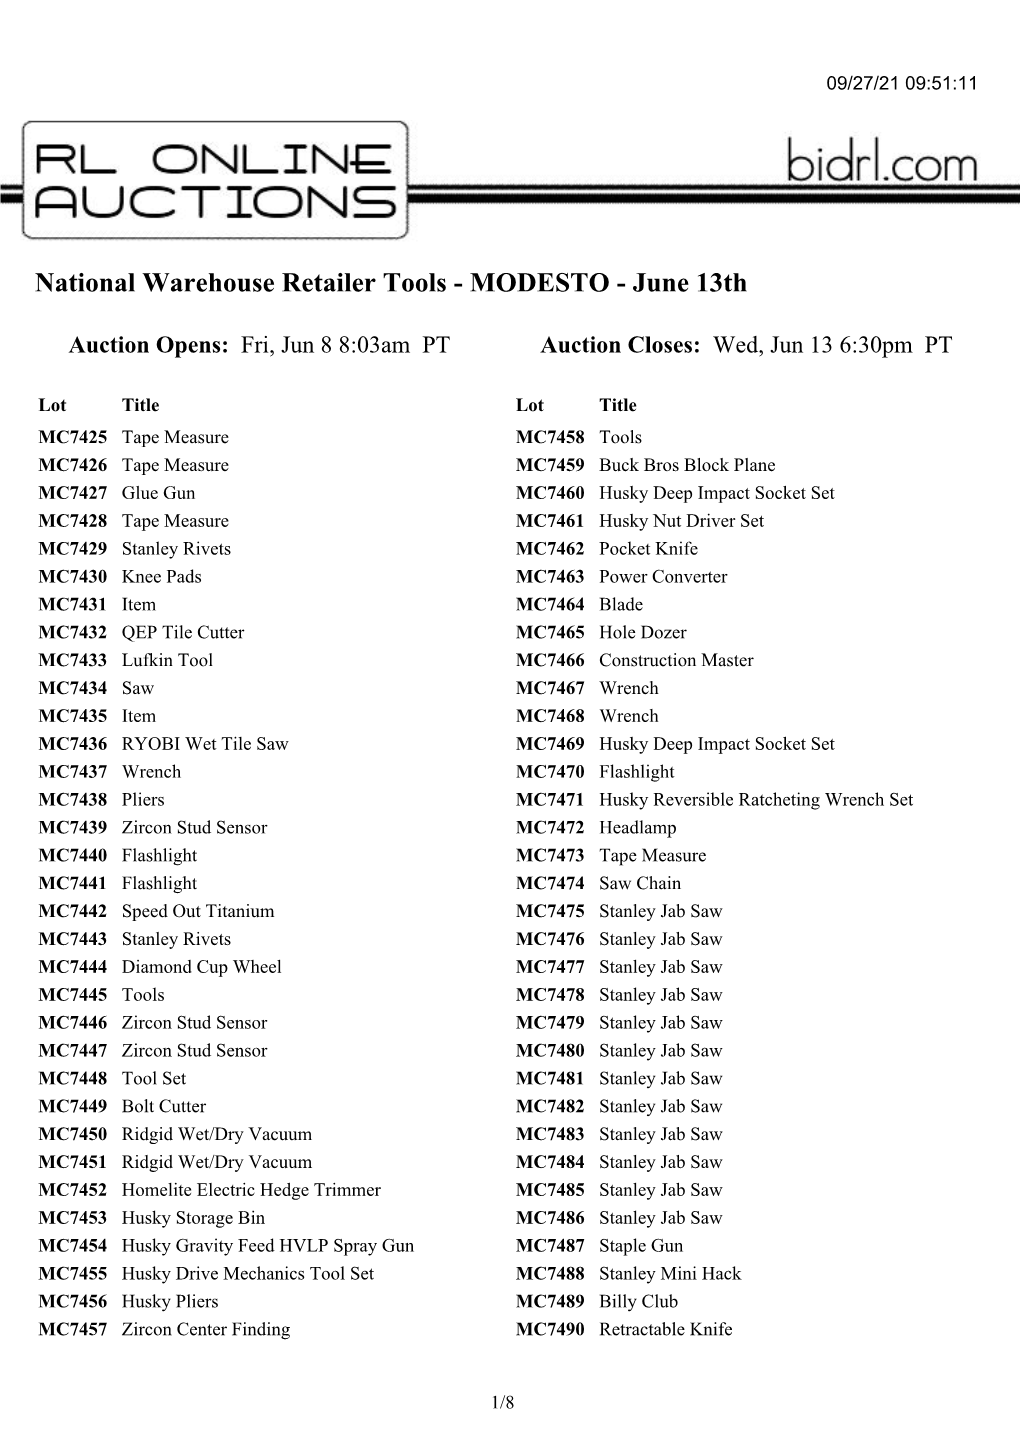 National Warehouse Retailer Tools - MODESTO - June 13Th